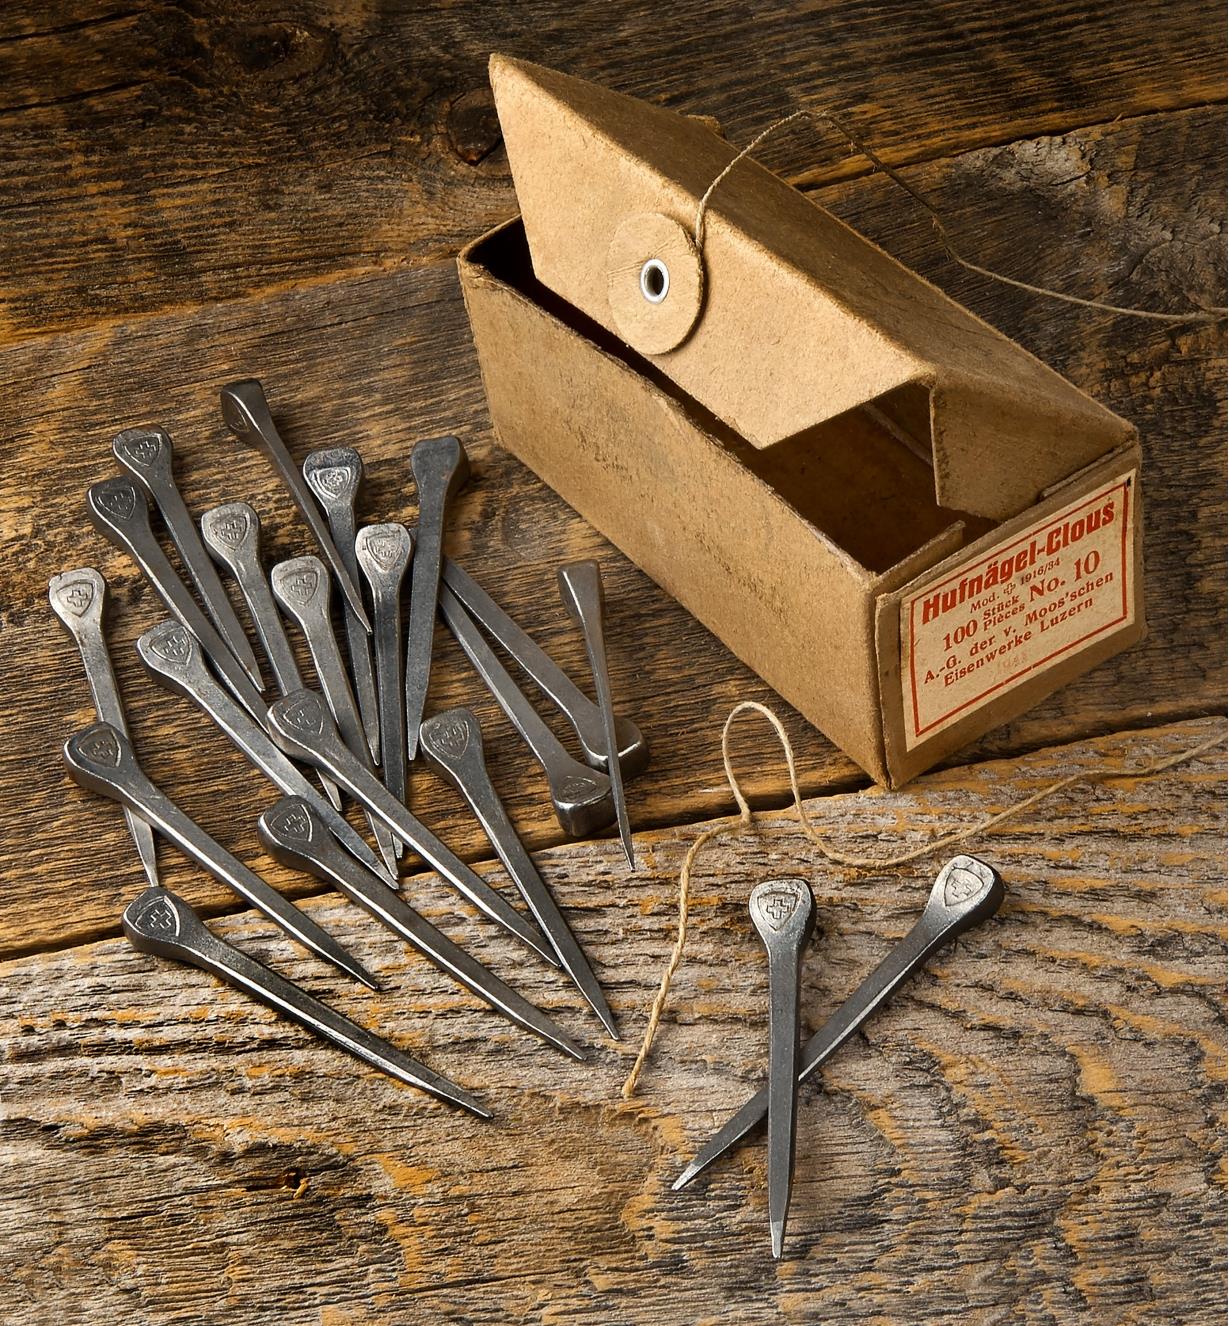 Vintage Horseshoe Nails - Lee Valley Tools